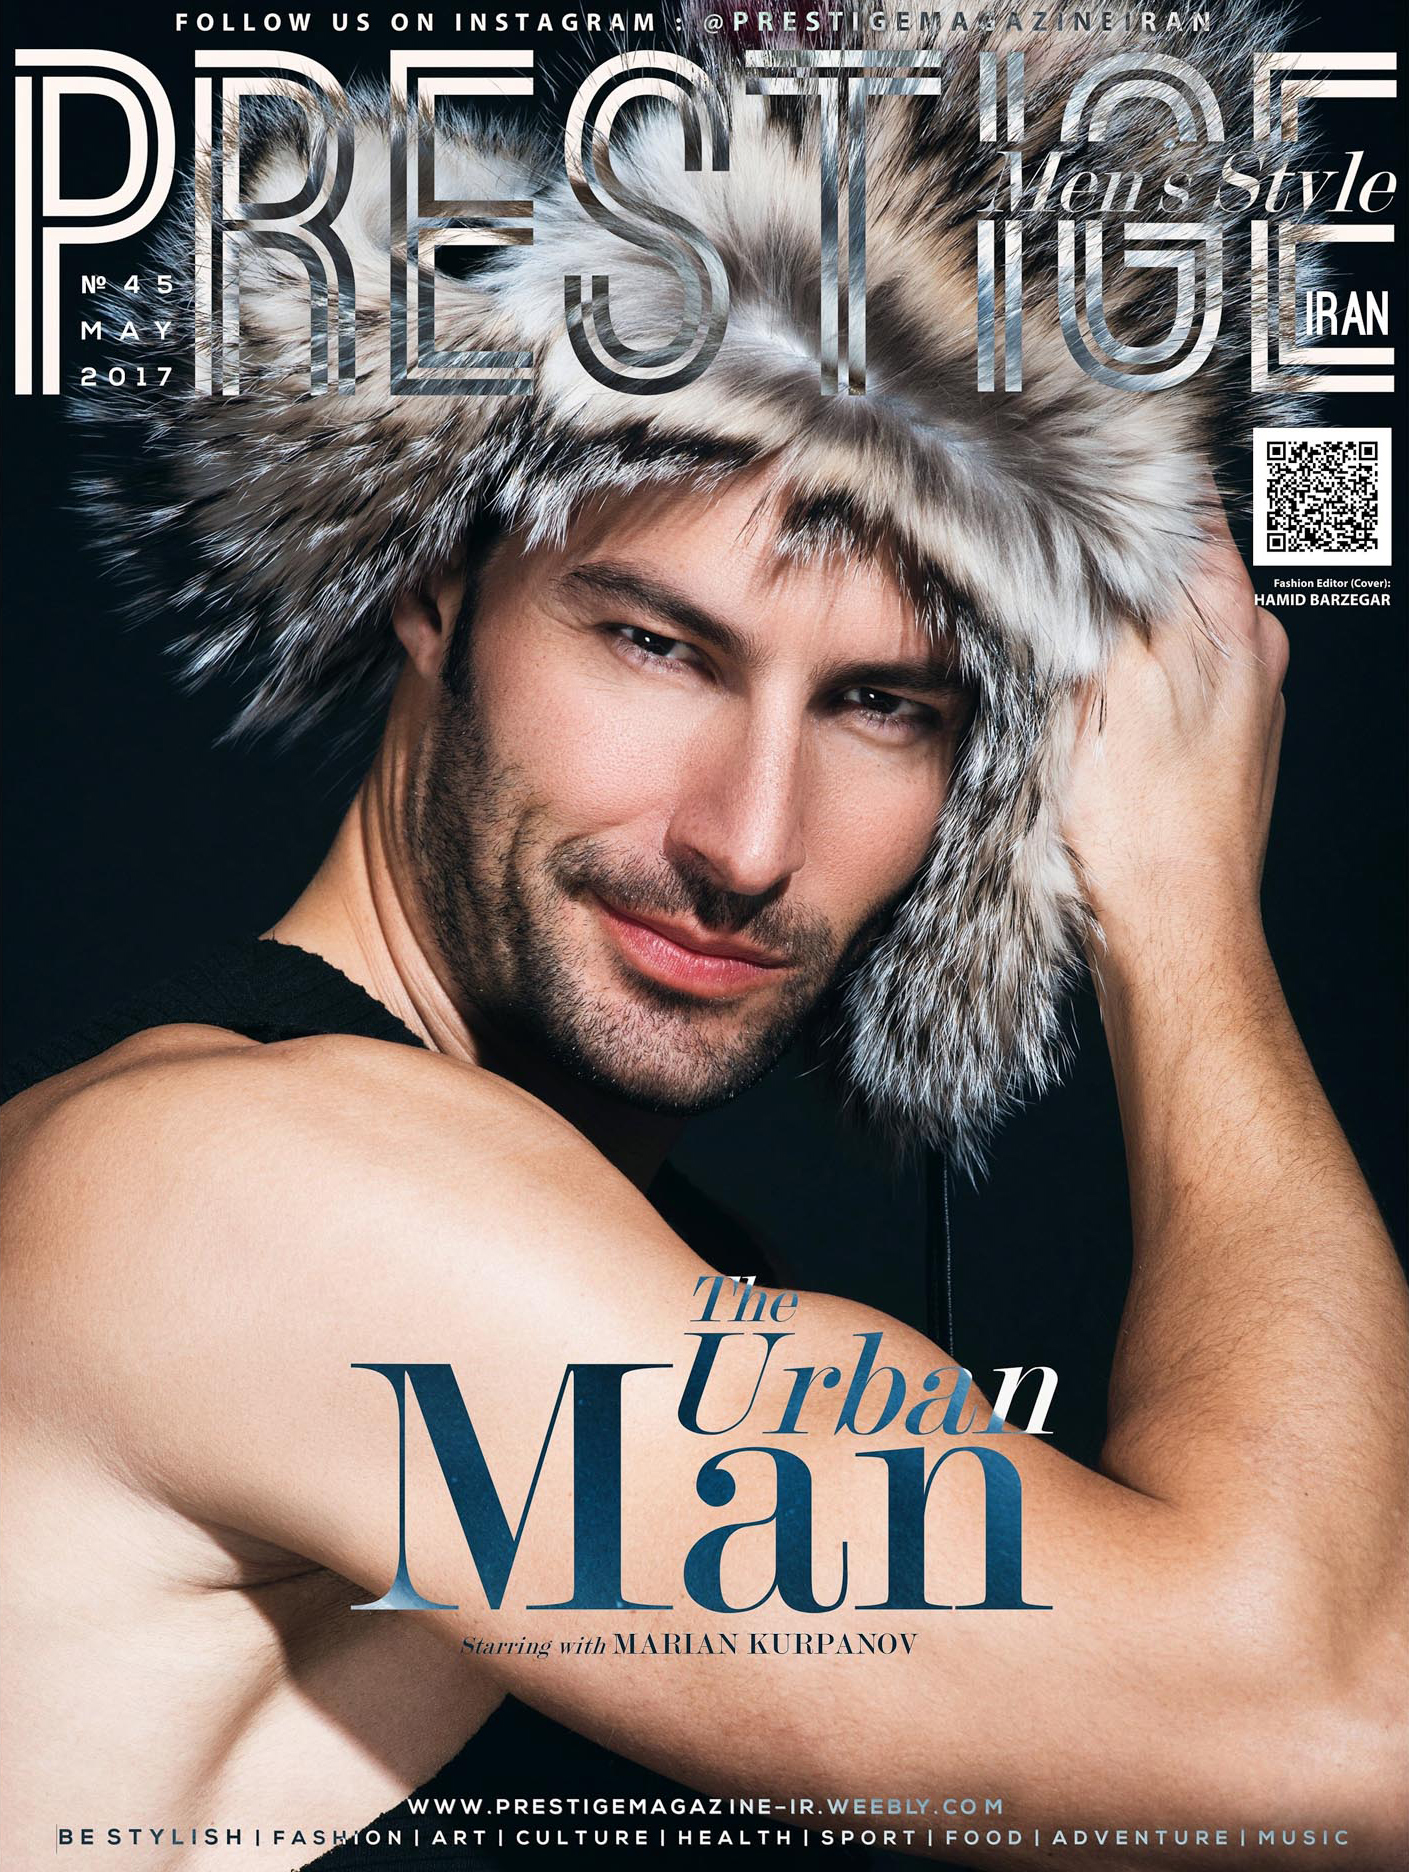 Prestige Men's Style Magazine - N.45 May 2017 Issue-1.jpg